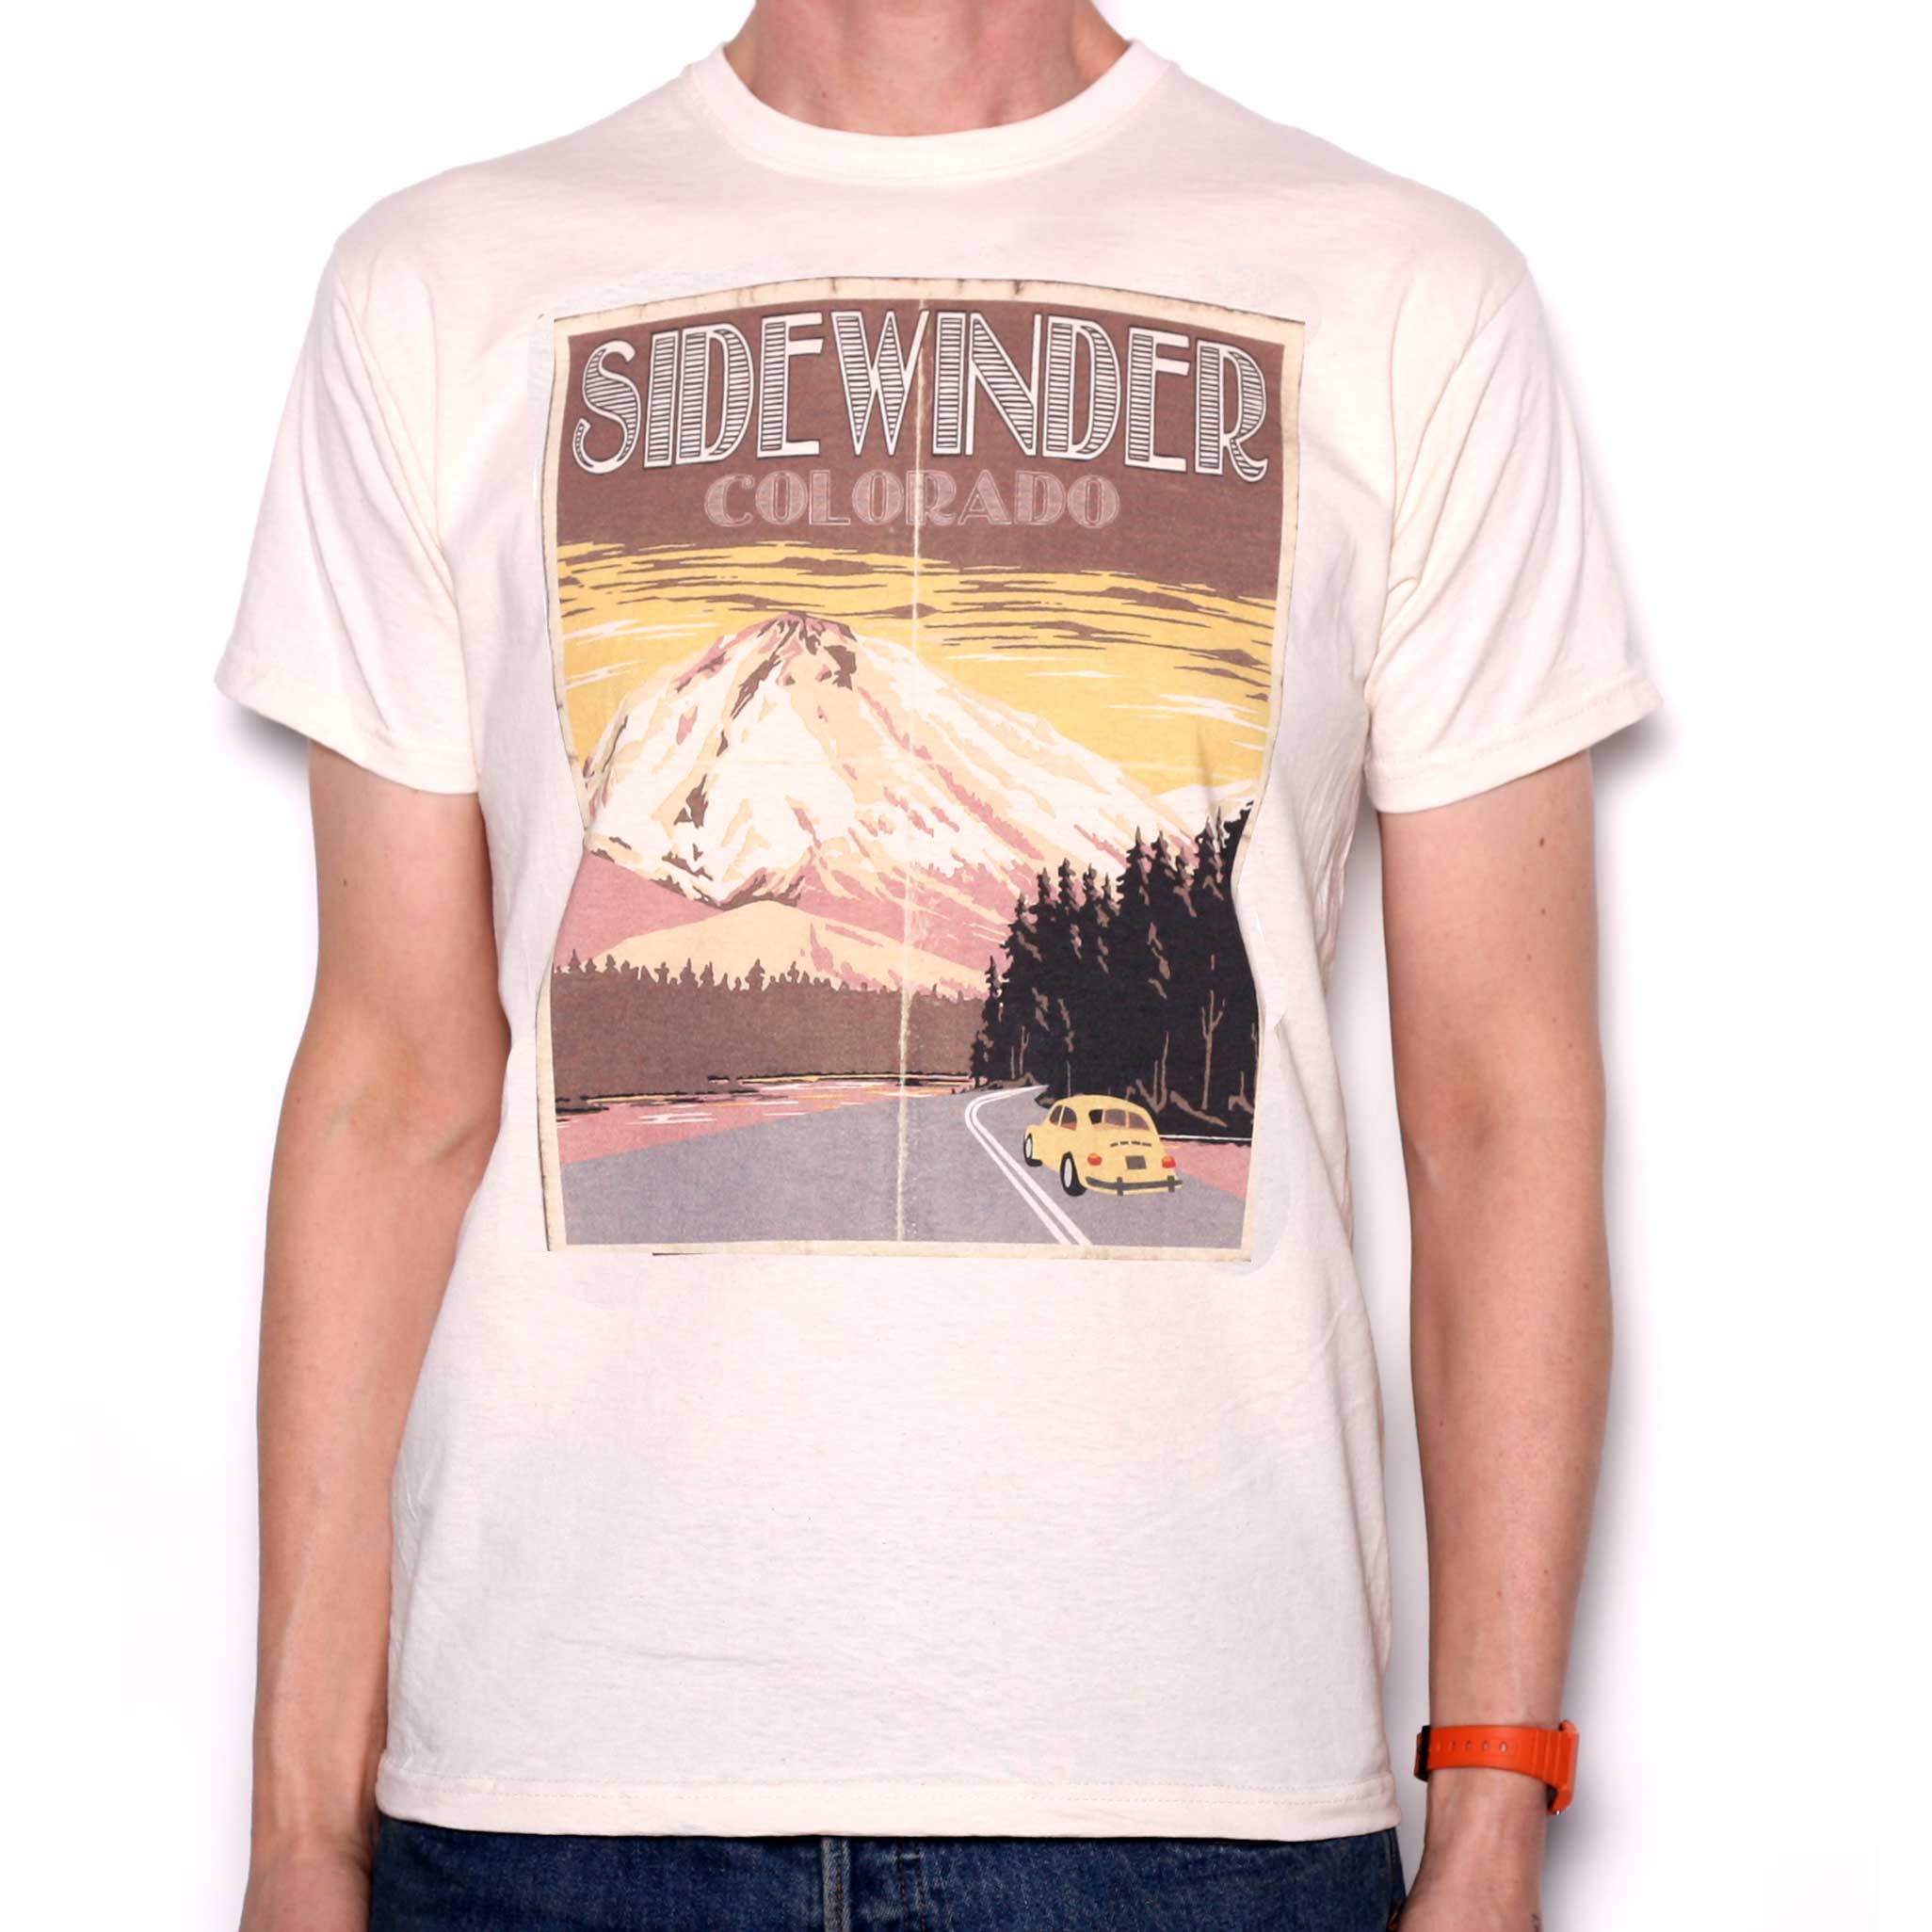 Sidewinder Colorado Travel Poster T Shirt